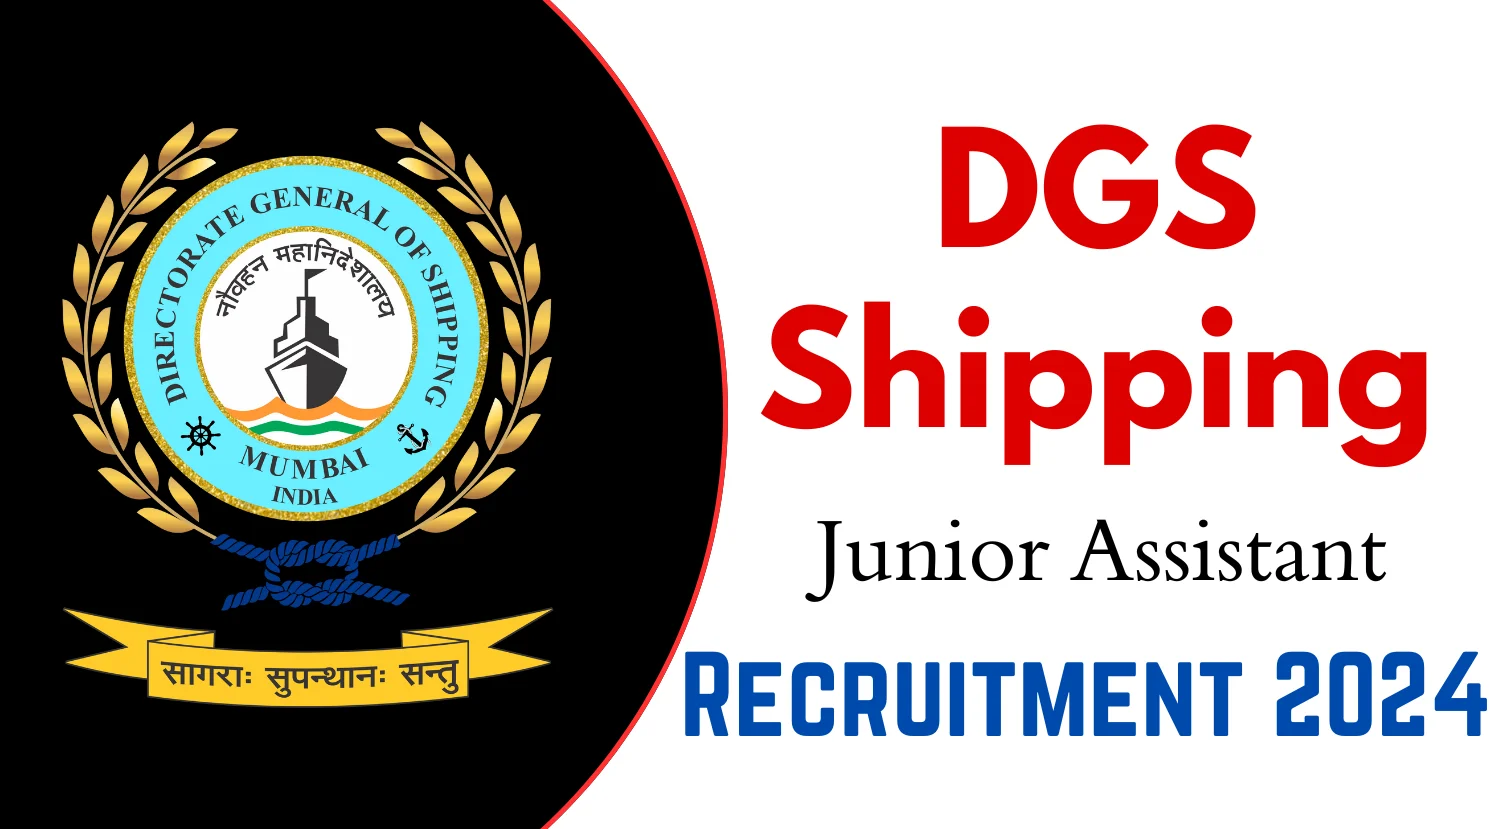 DGS Shipping Junior Assistant Recruitment 2024